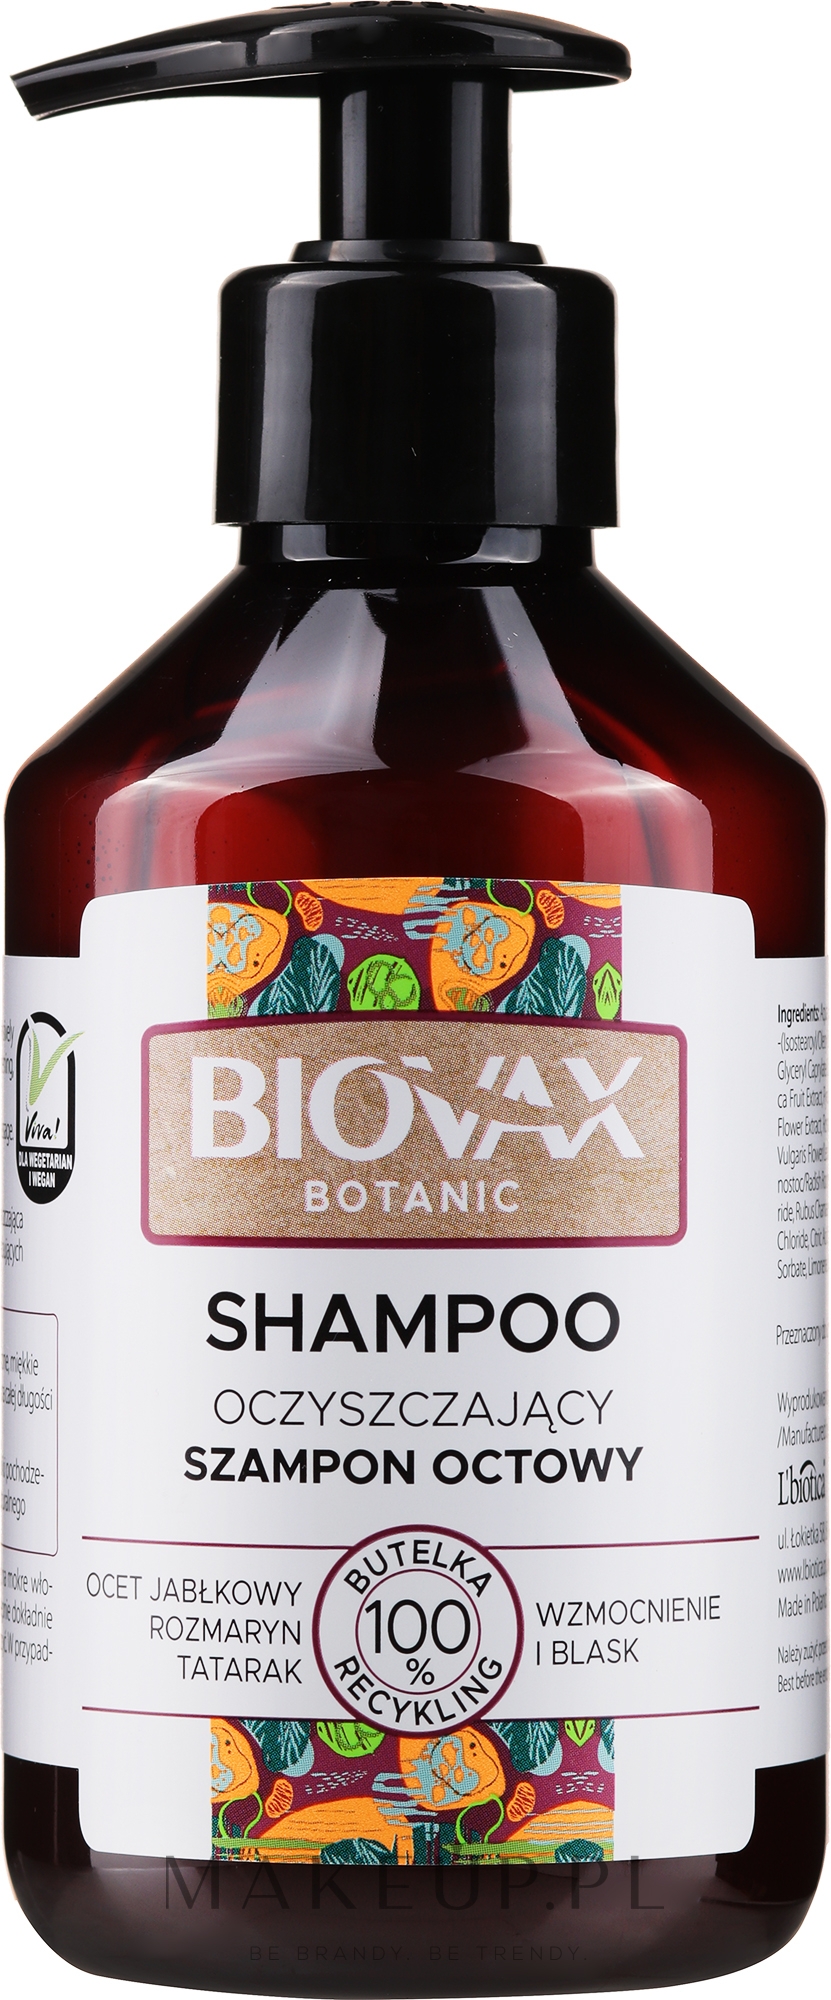 biovax orchid szampon